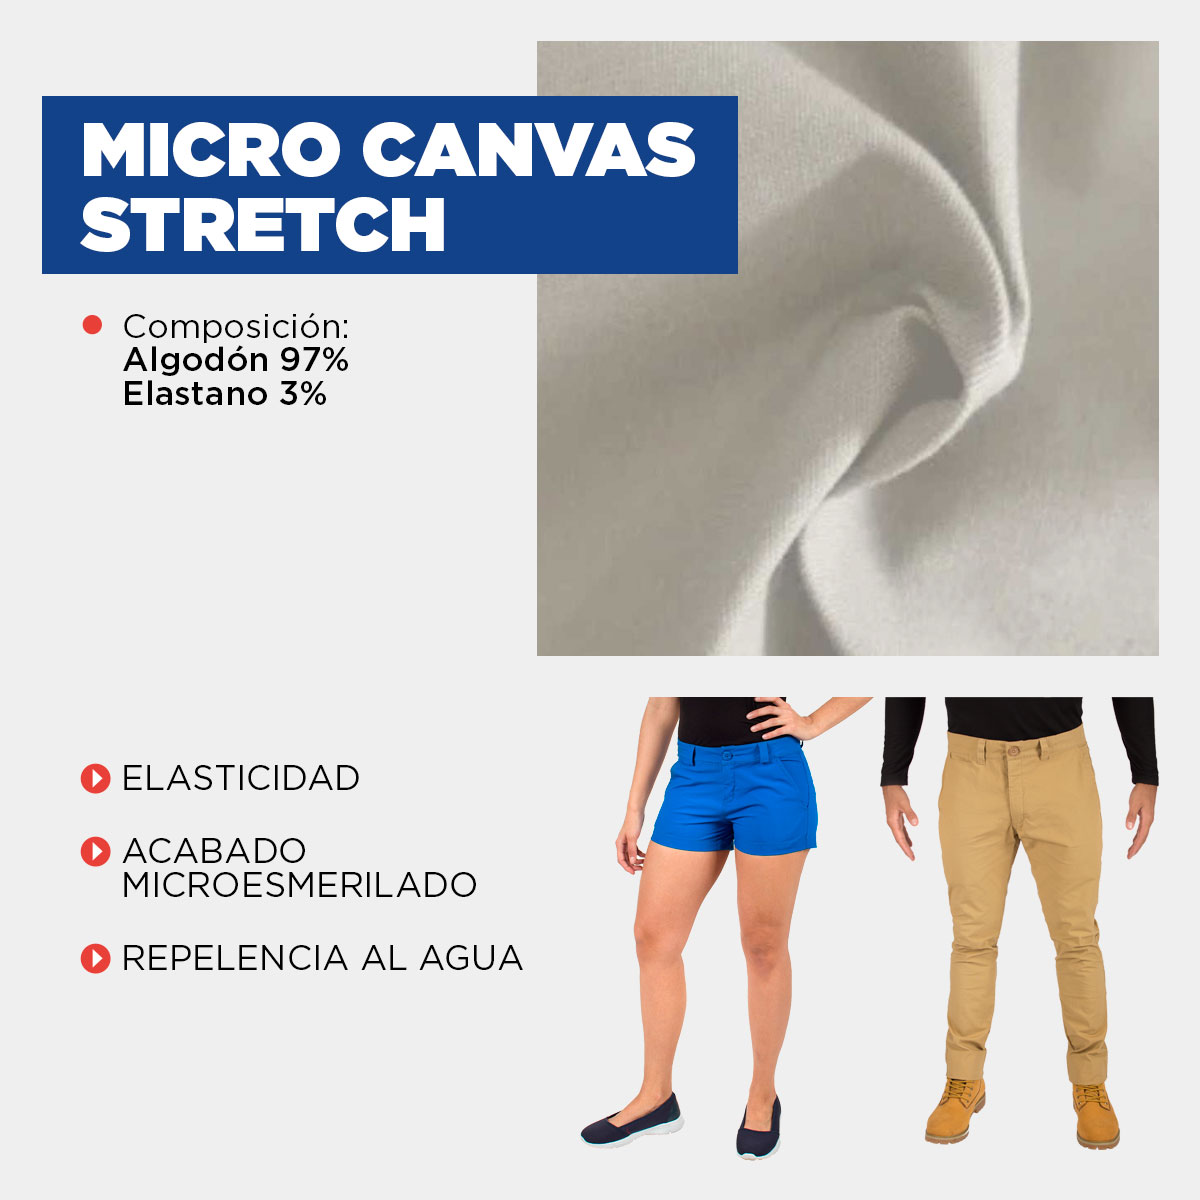 Microcanvas Stretch – Telas